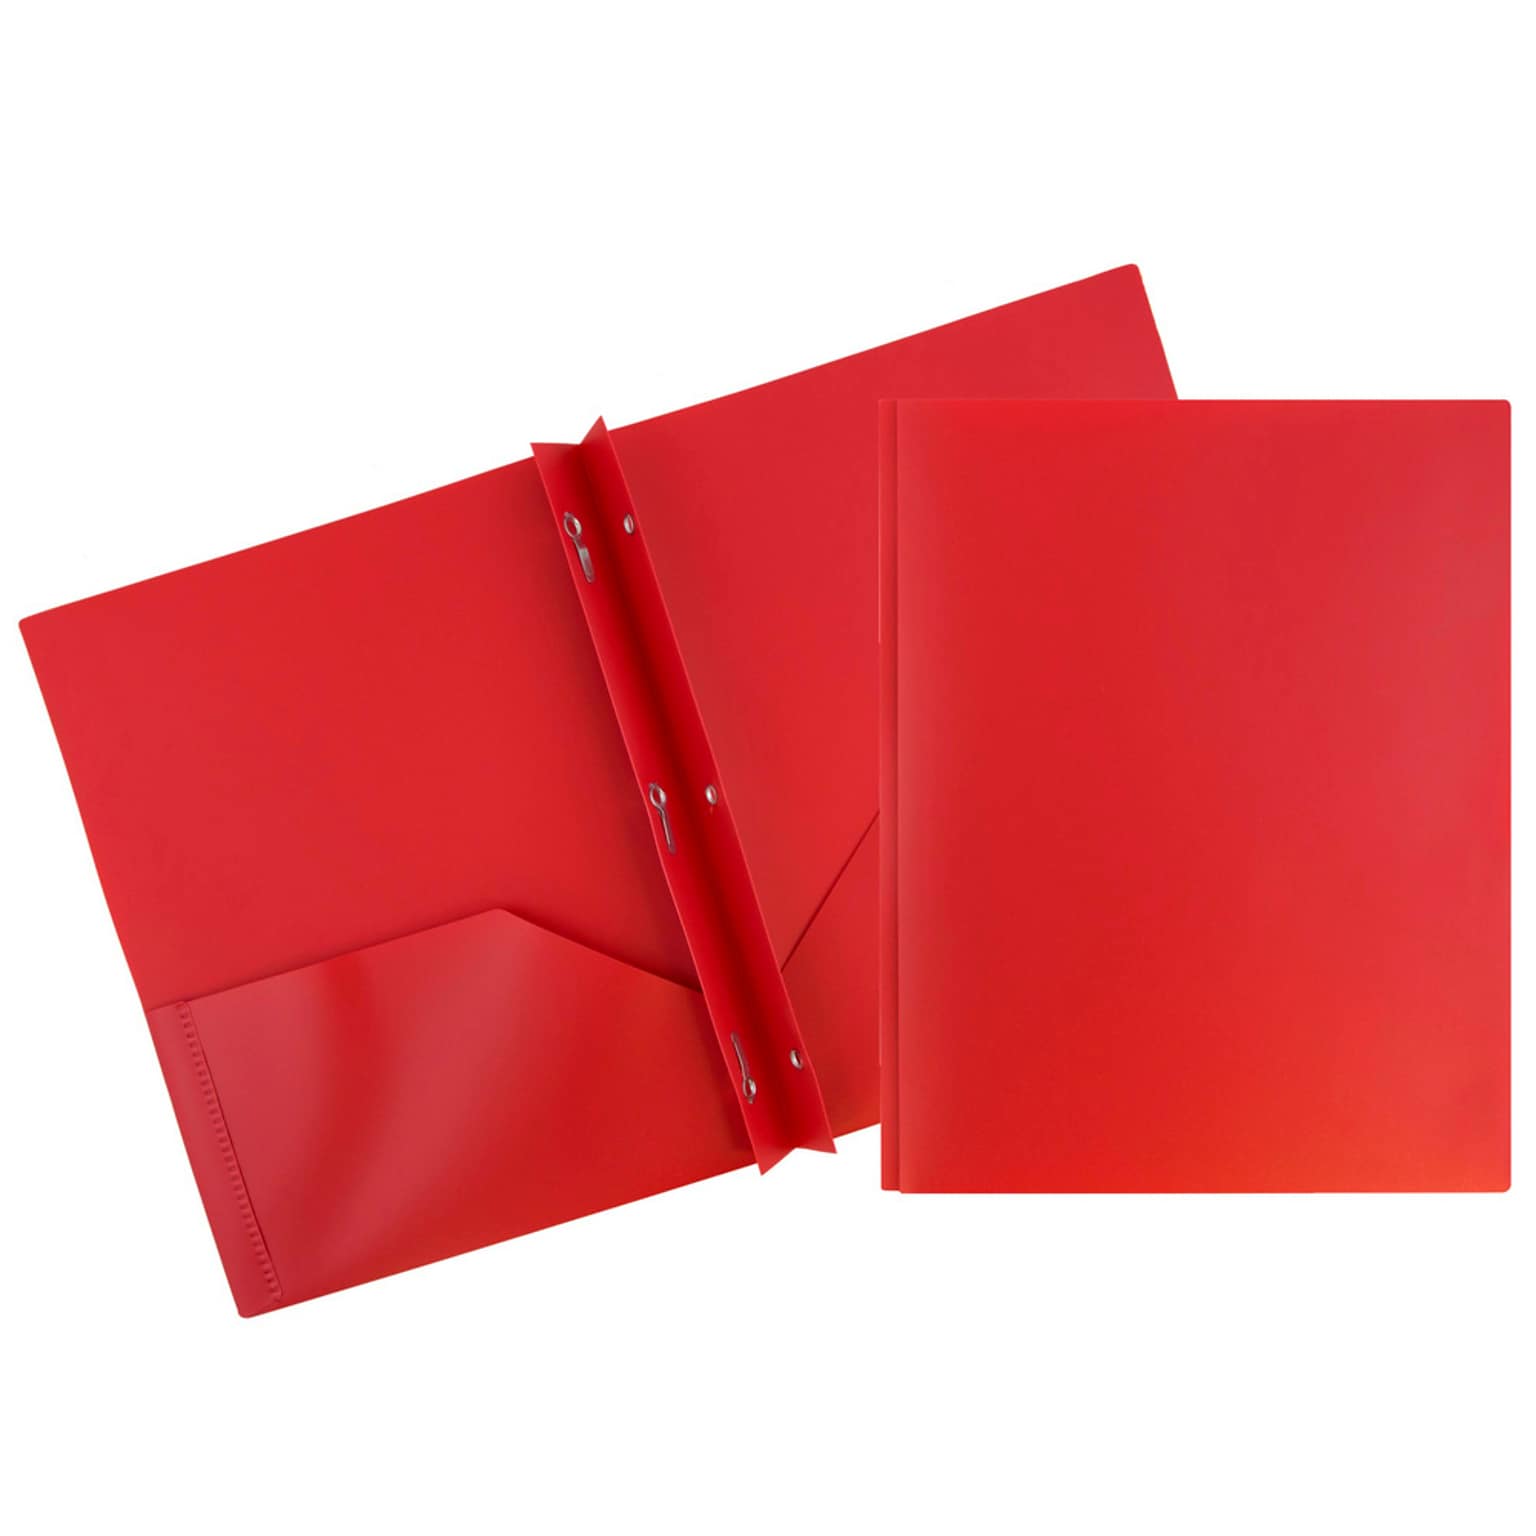 JAM Paper POP 2-Pocket Plastic Folders with Metal Prongs Fastener Clasps, Red, 96/Pack (382ECredb)